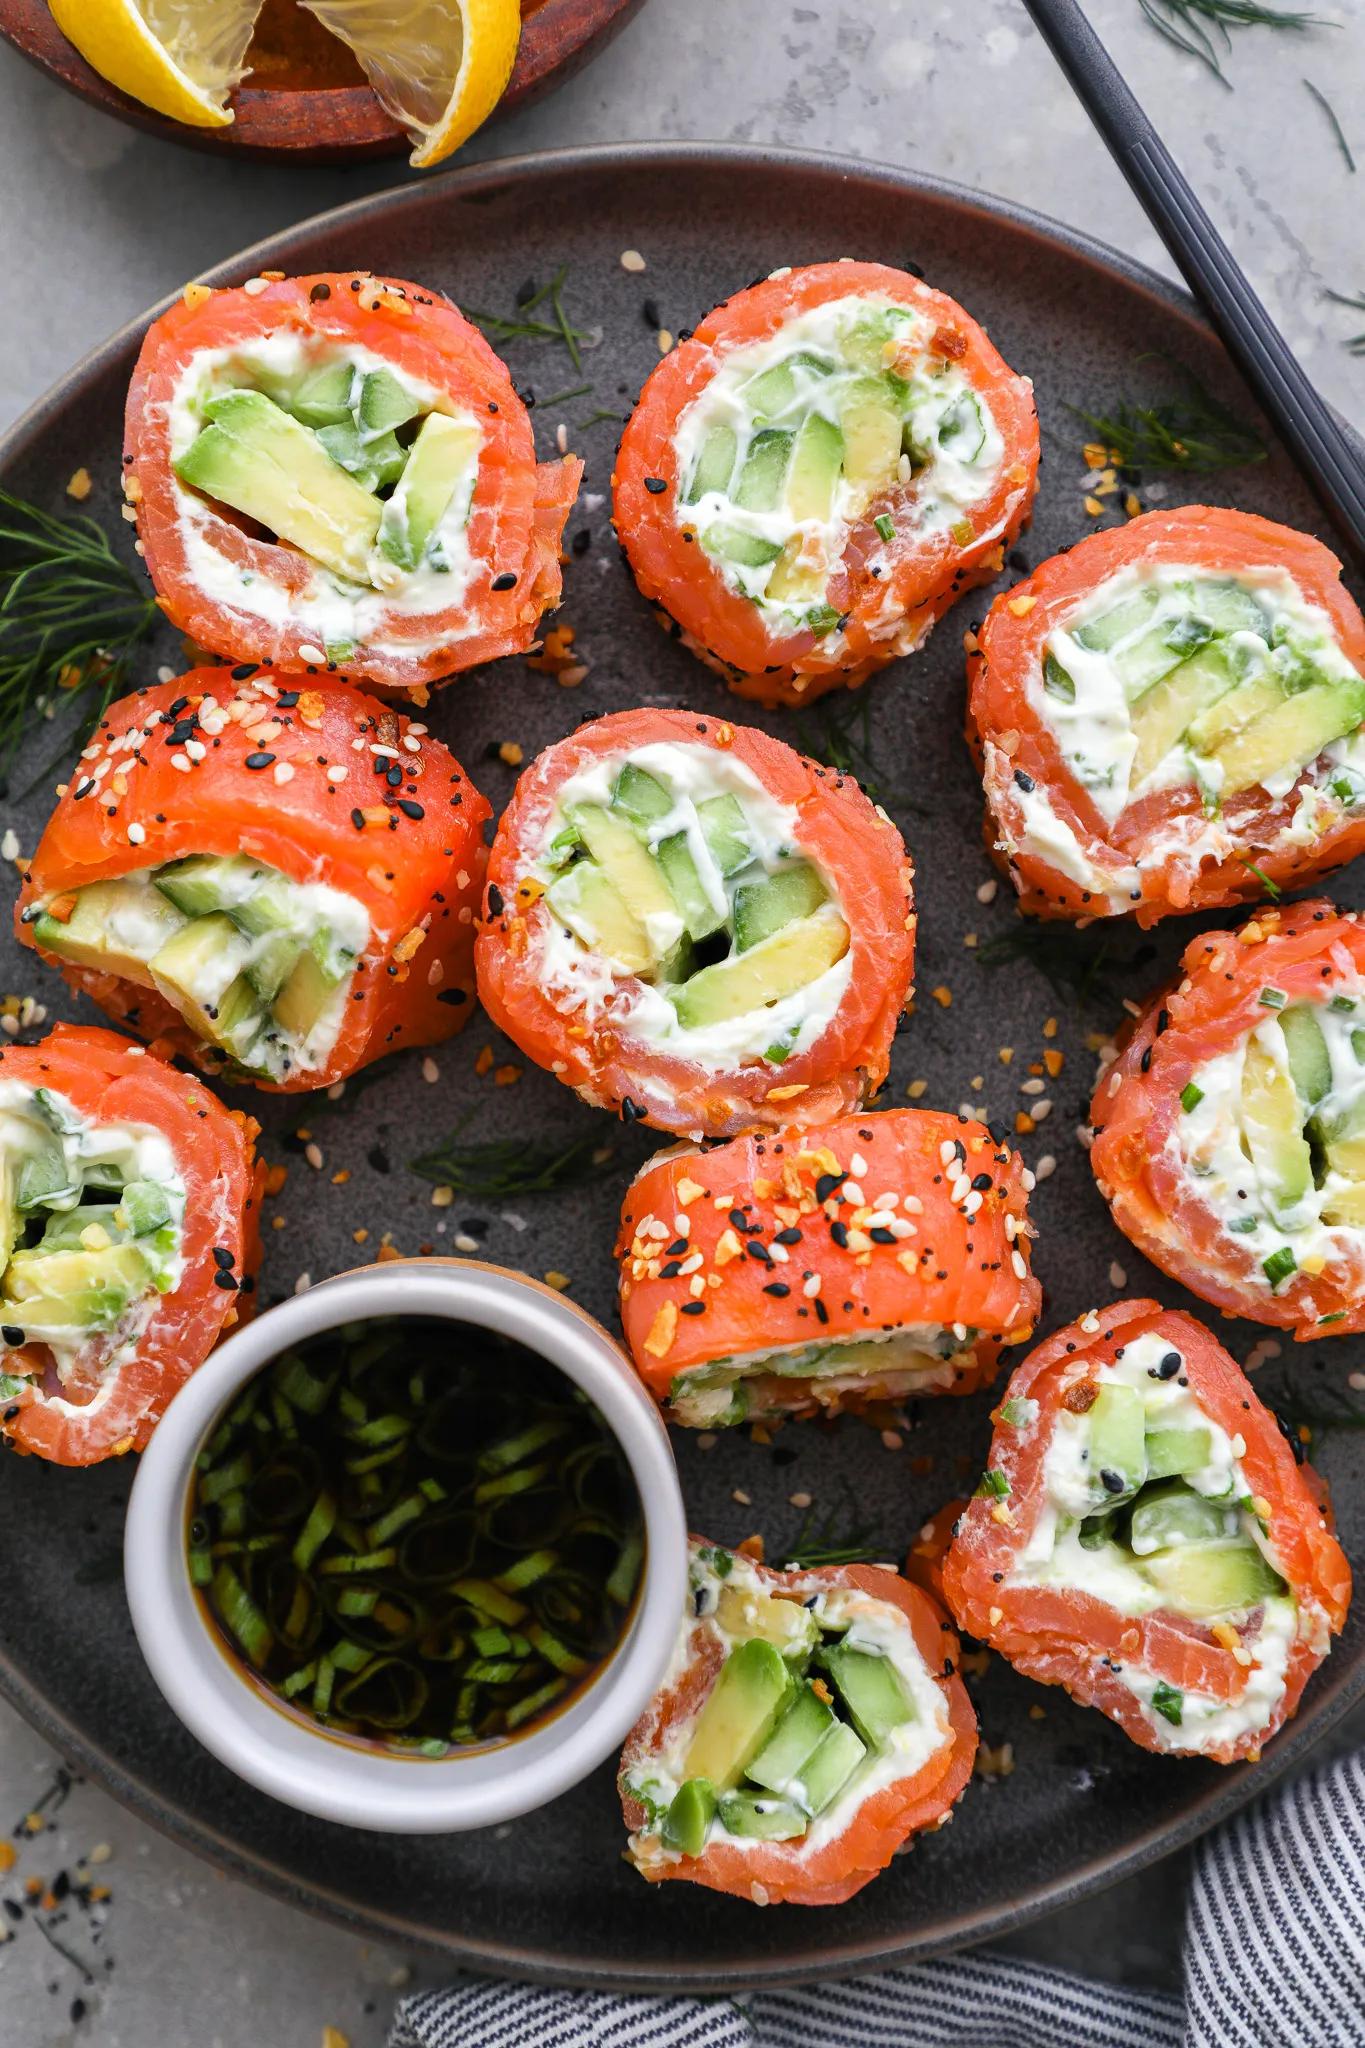 how to make smoked salmon sushi - How to make salmon safe for sushi